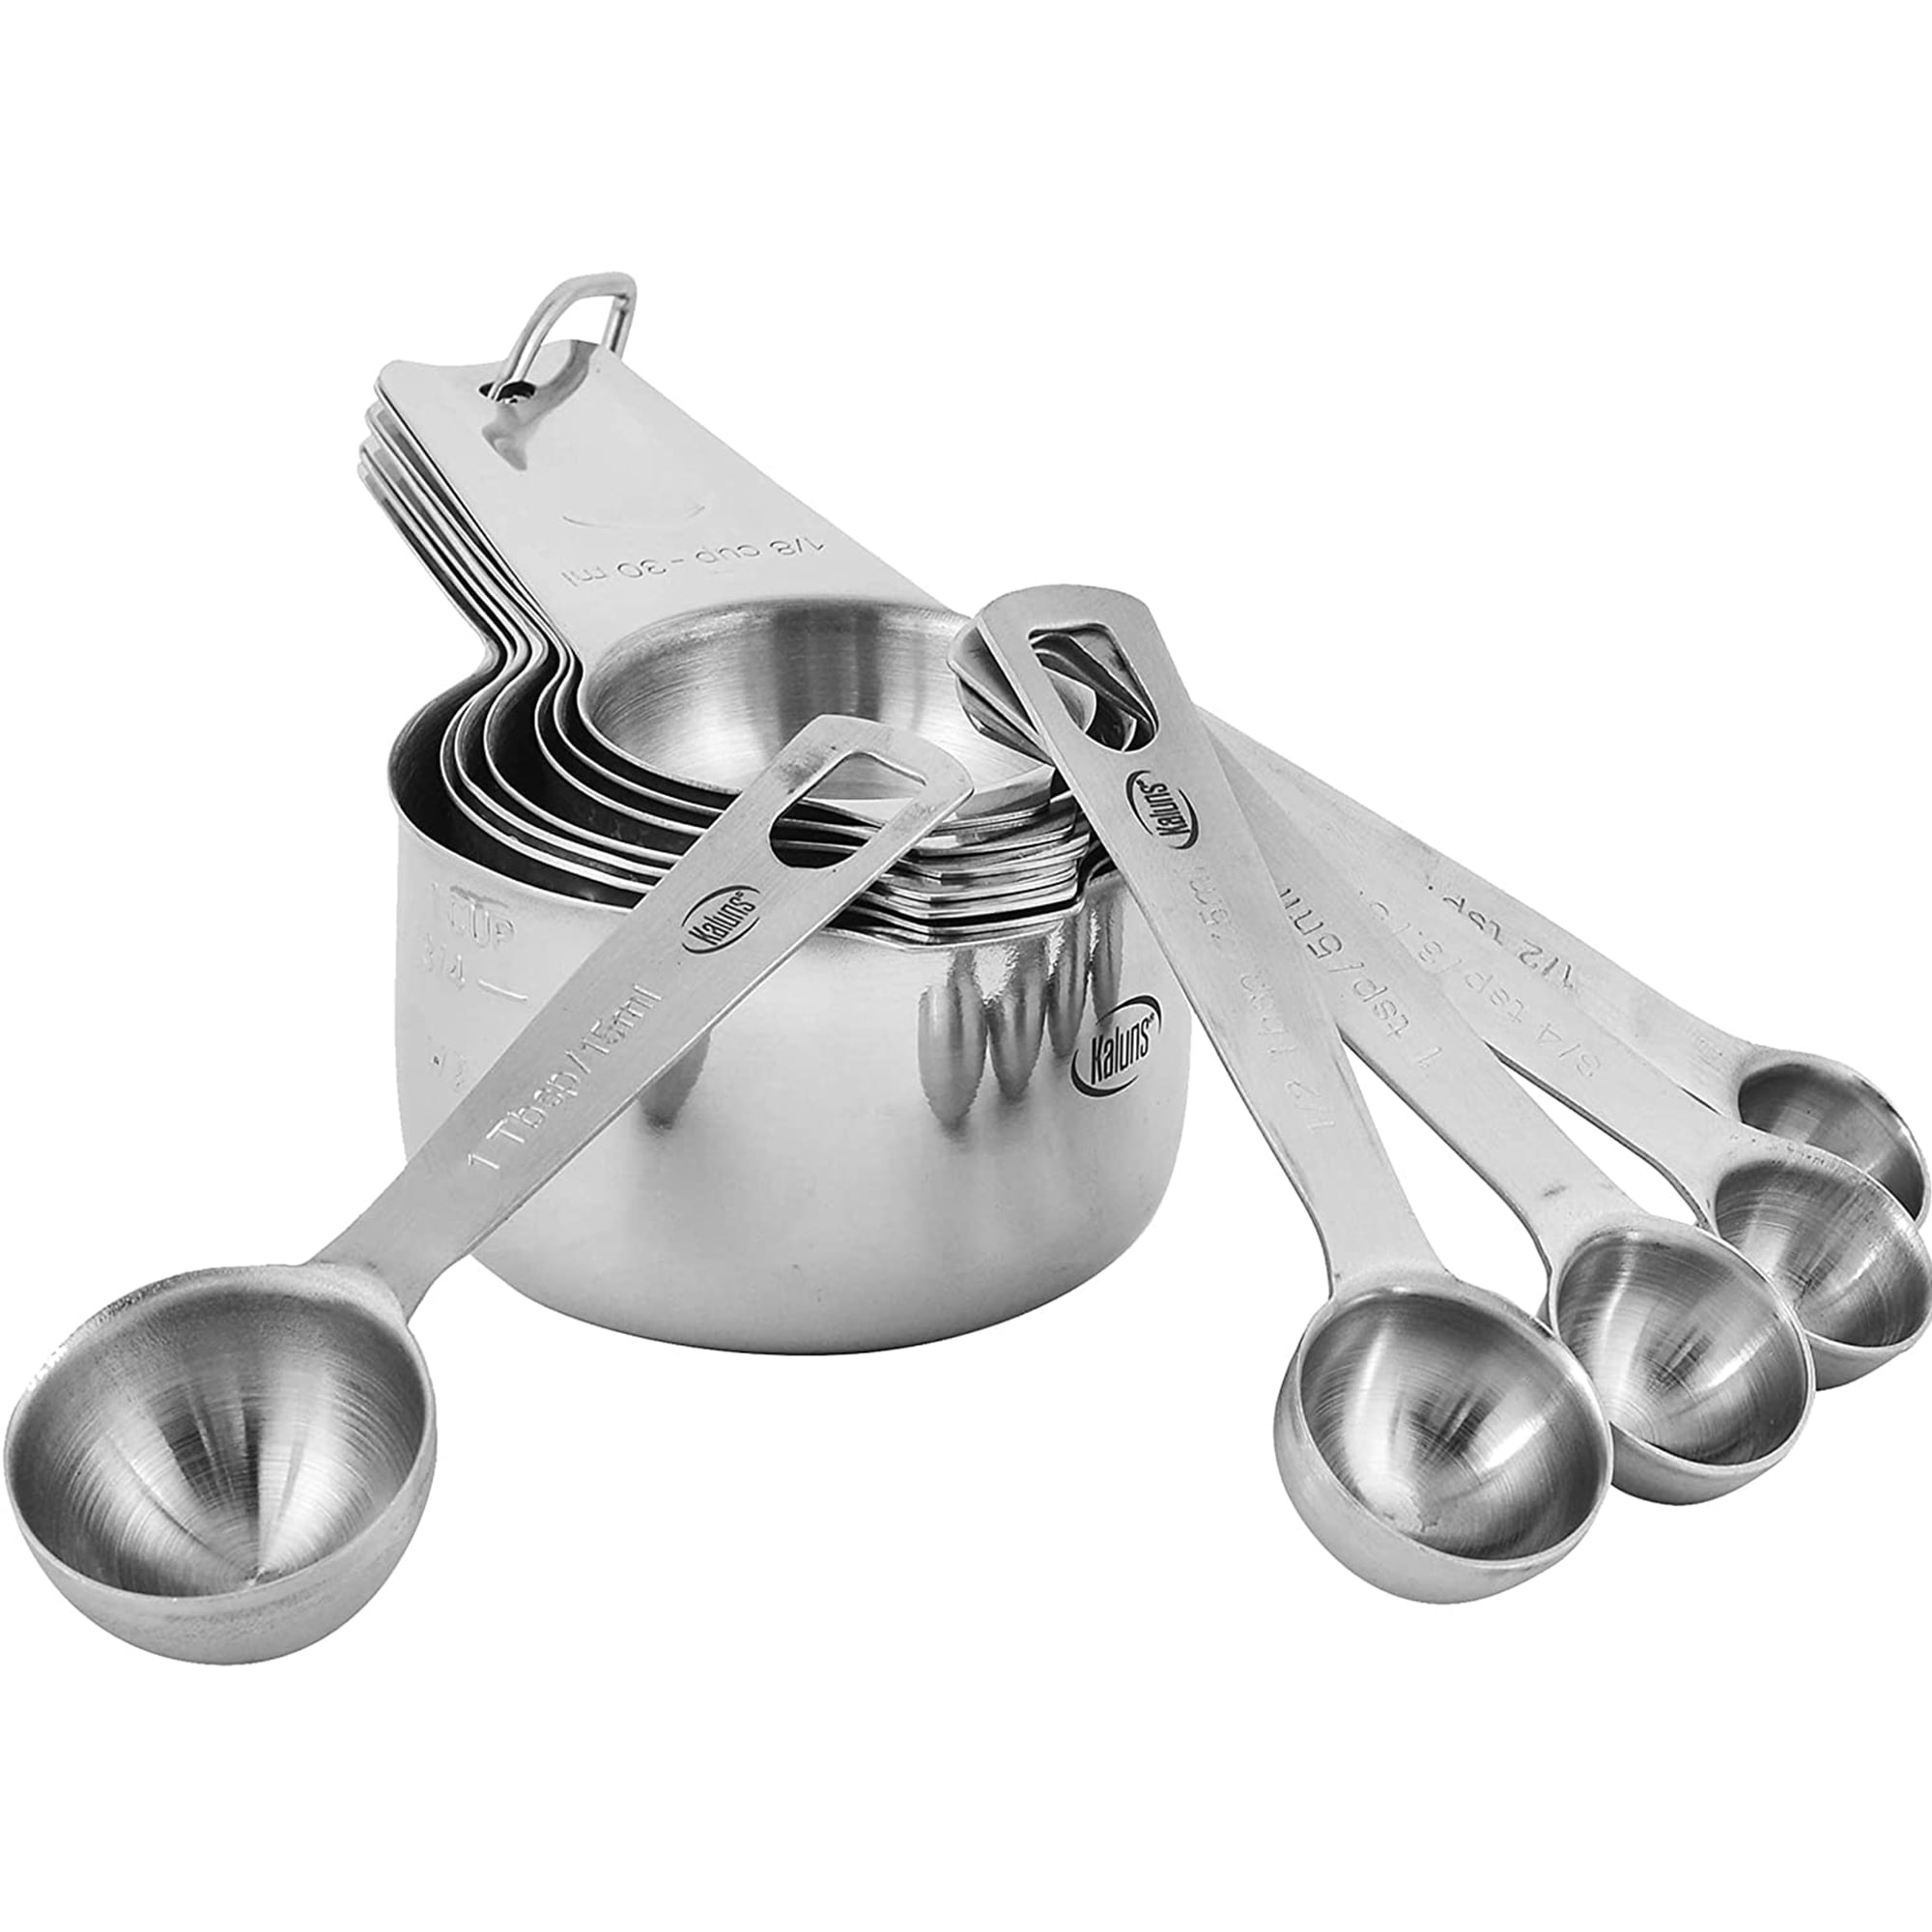 Stainless Steel Measuring Cups & Spoons - WebstaurantStore